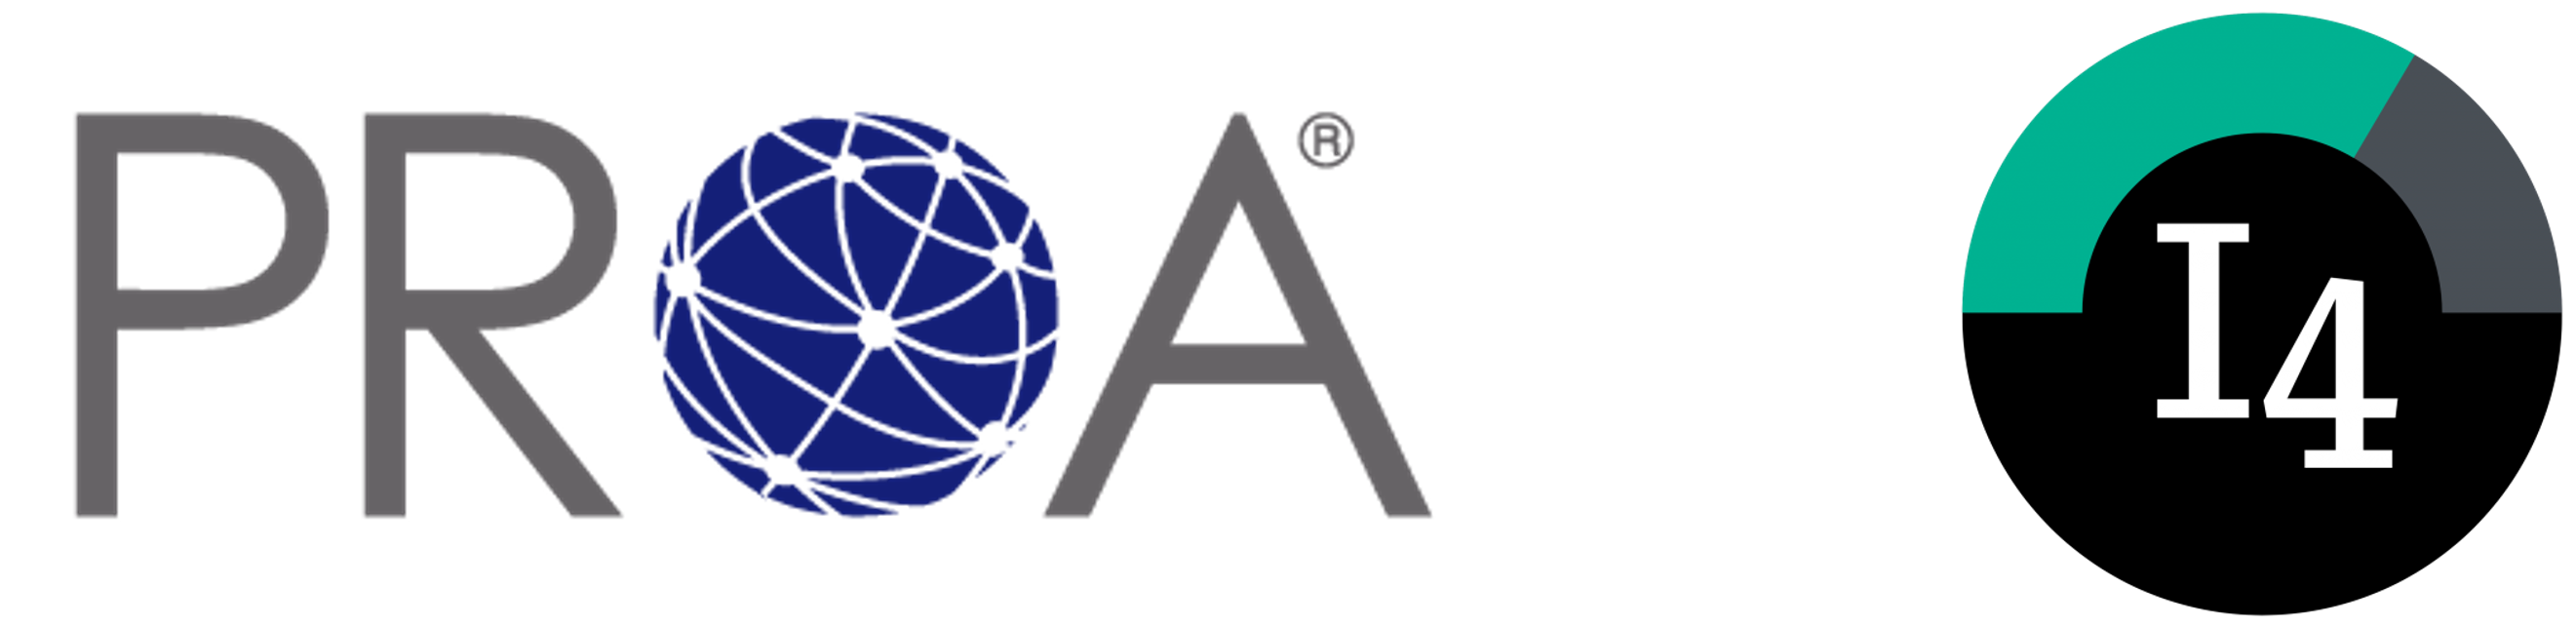 Logo PROA e I4